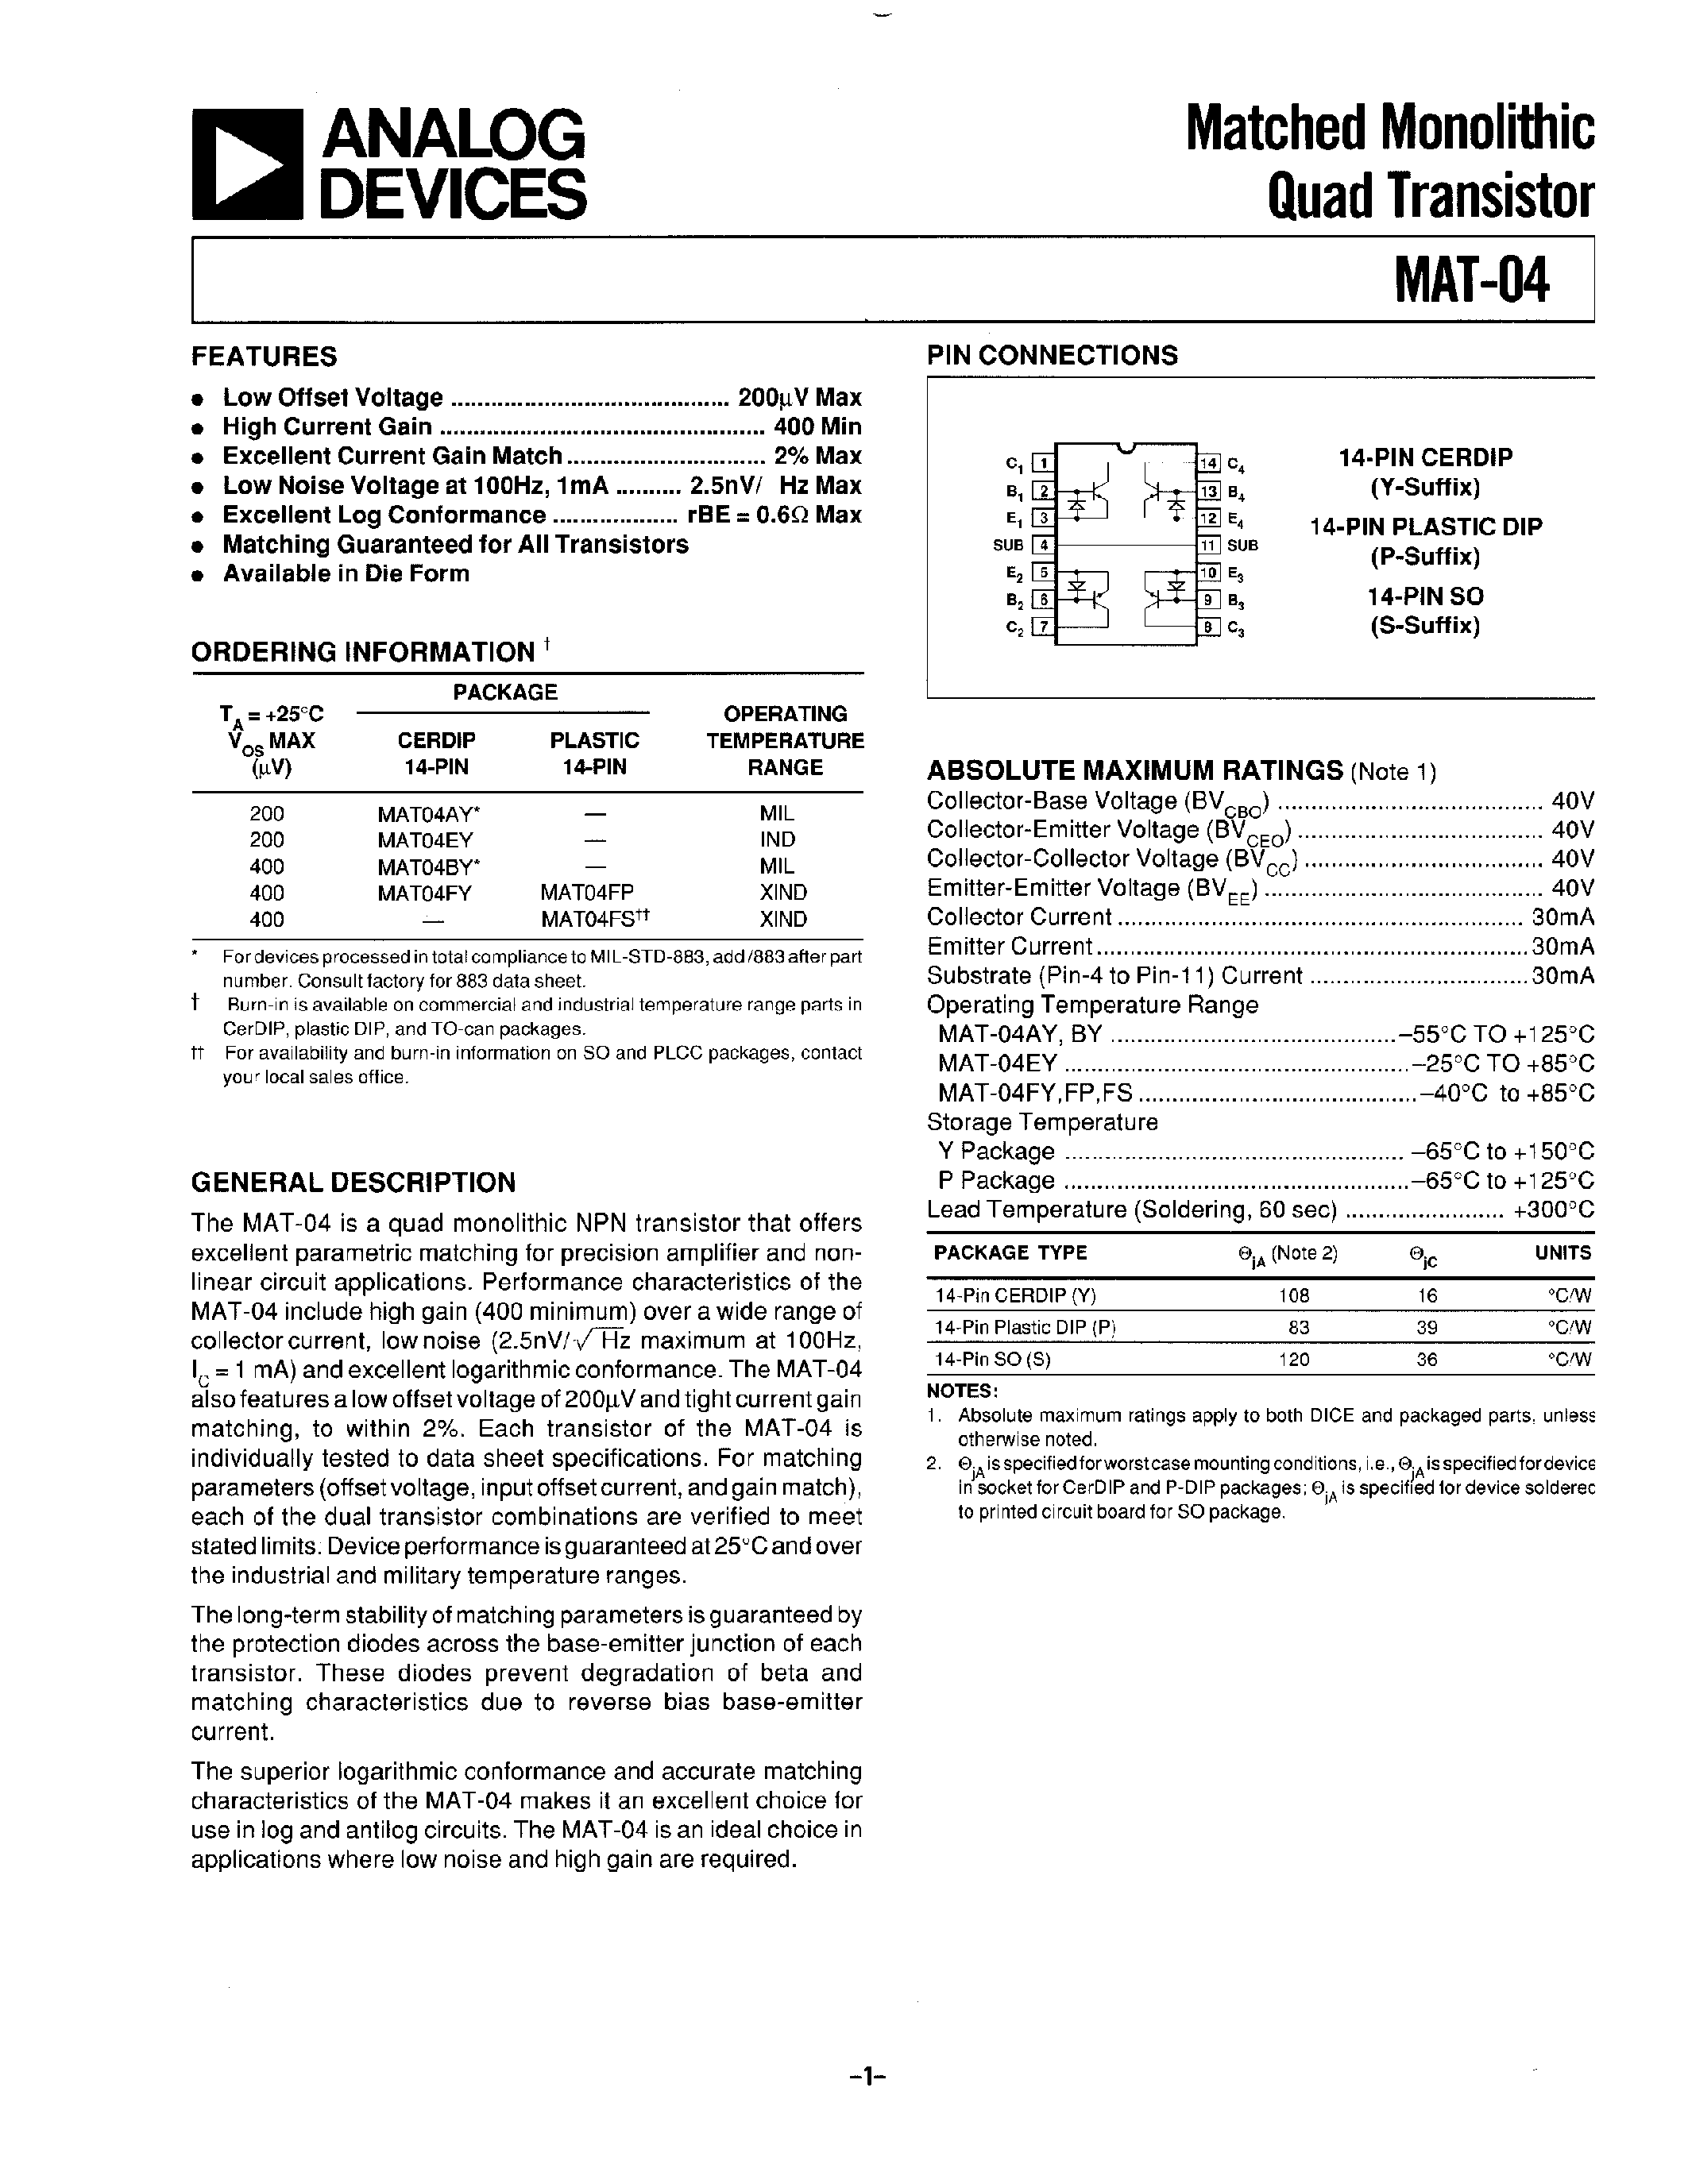 Datasheet MAT-04 - Matched Monolithic Quad Transistor page 1